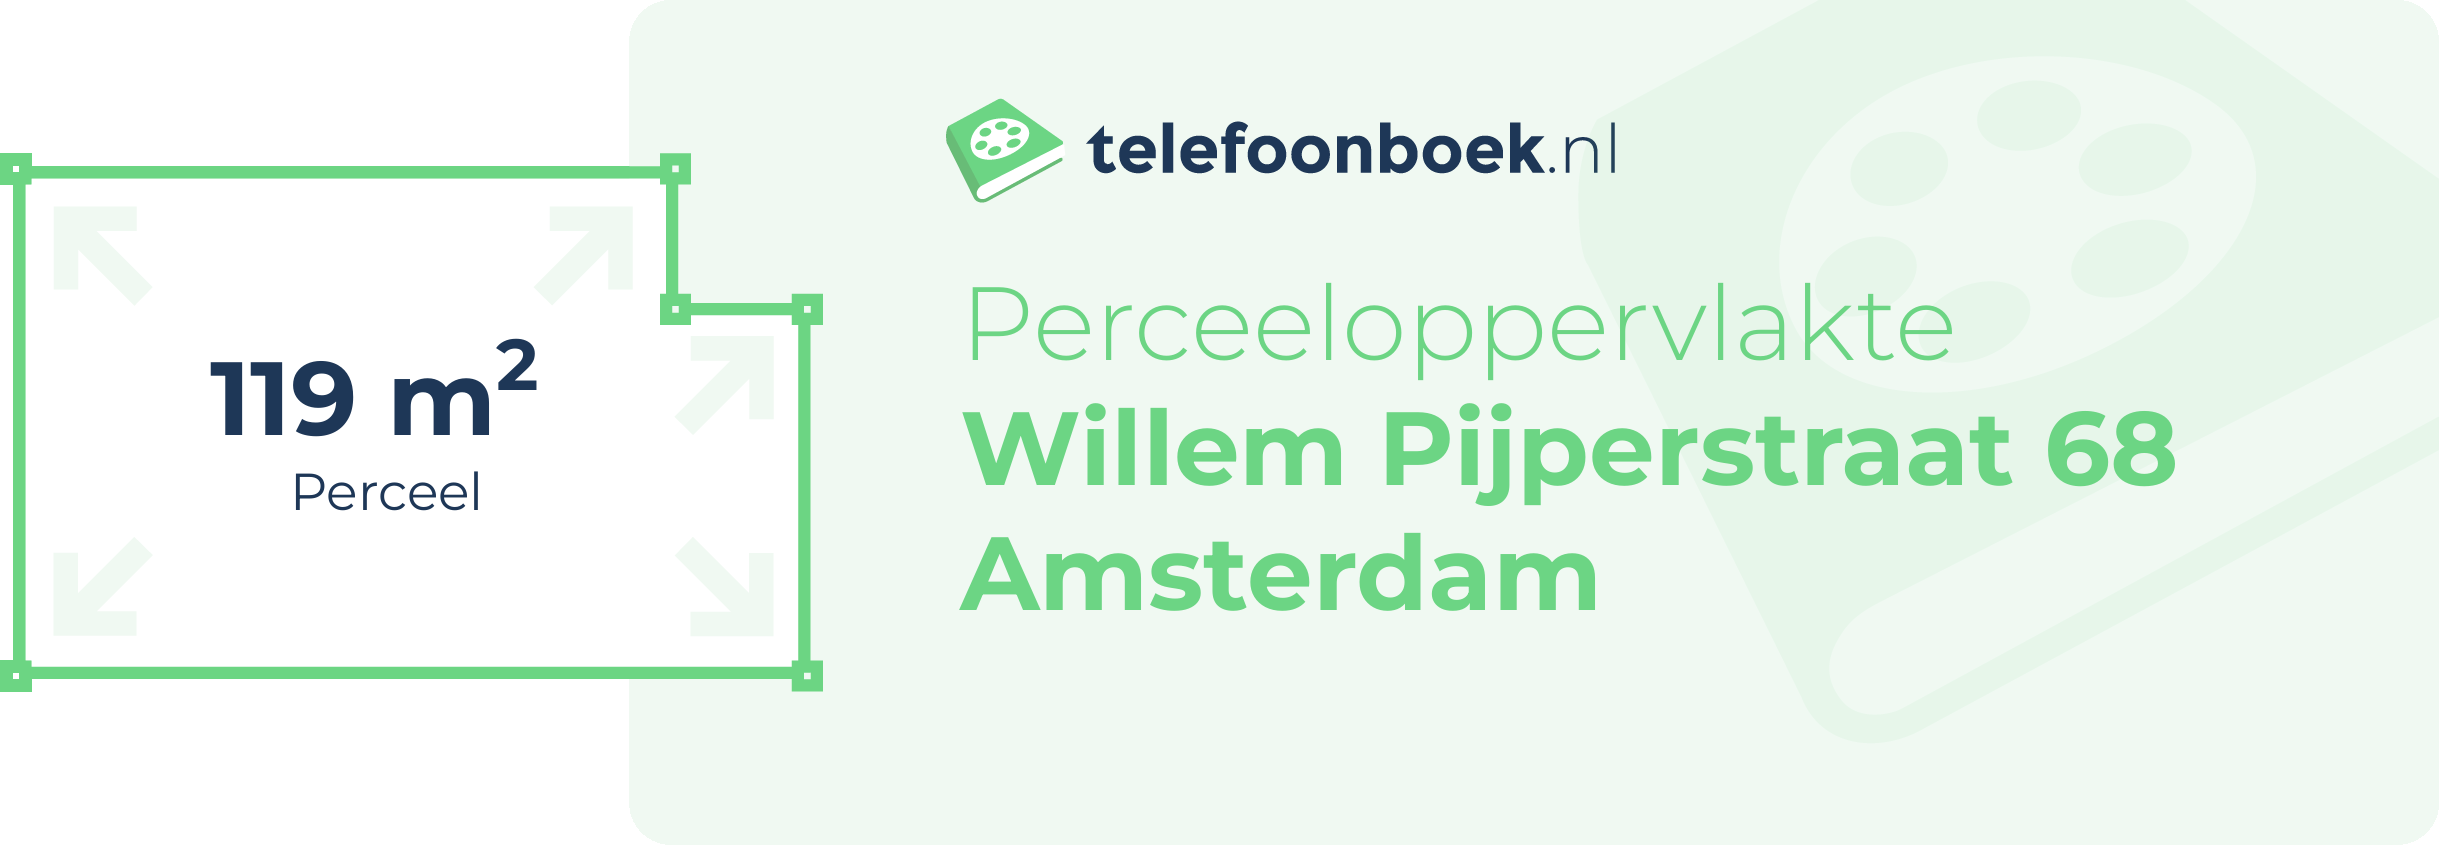 Perceeloppervlakte Willem Pijperstraat 68 Amsterdam